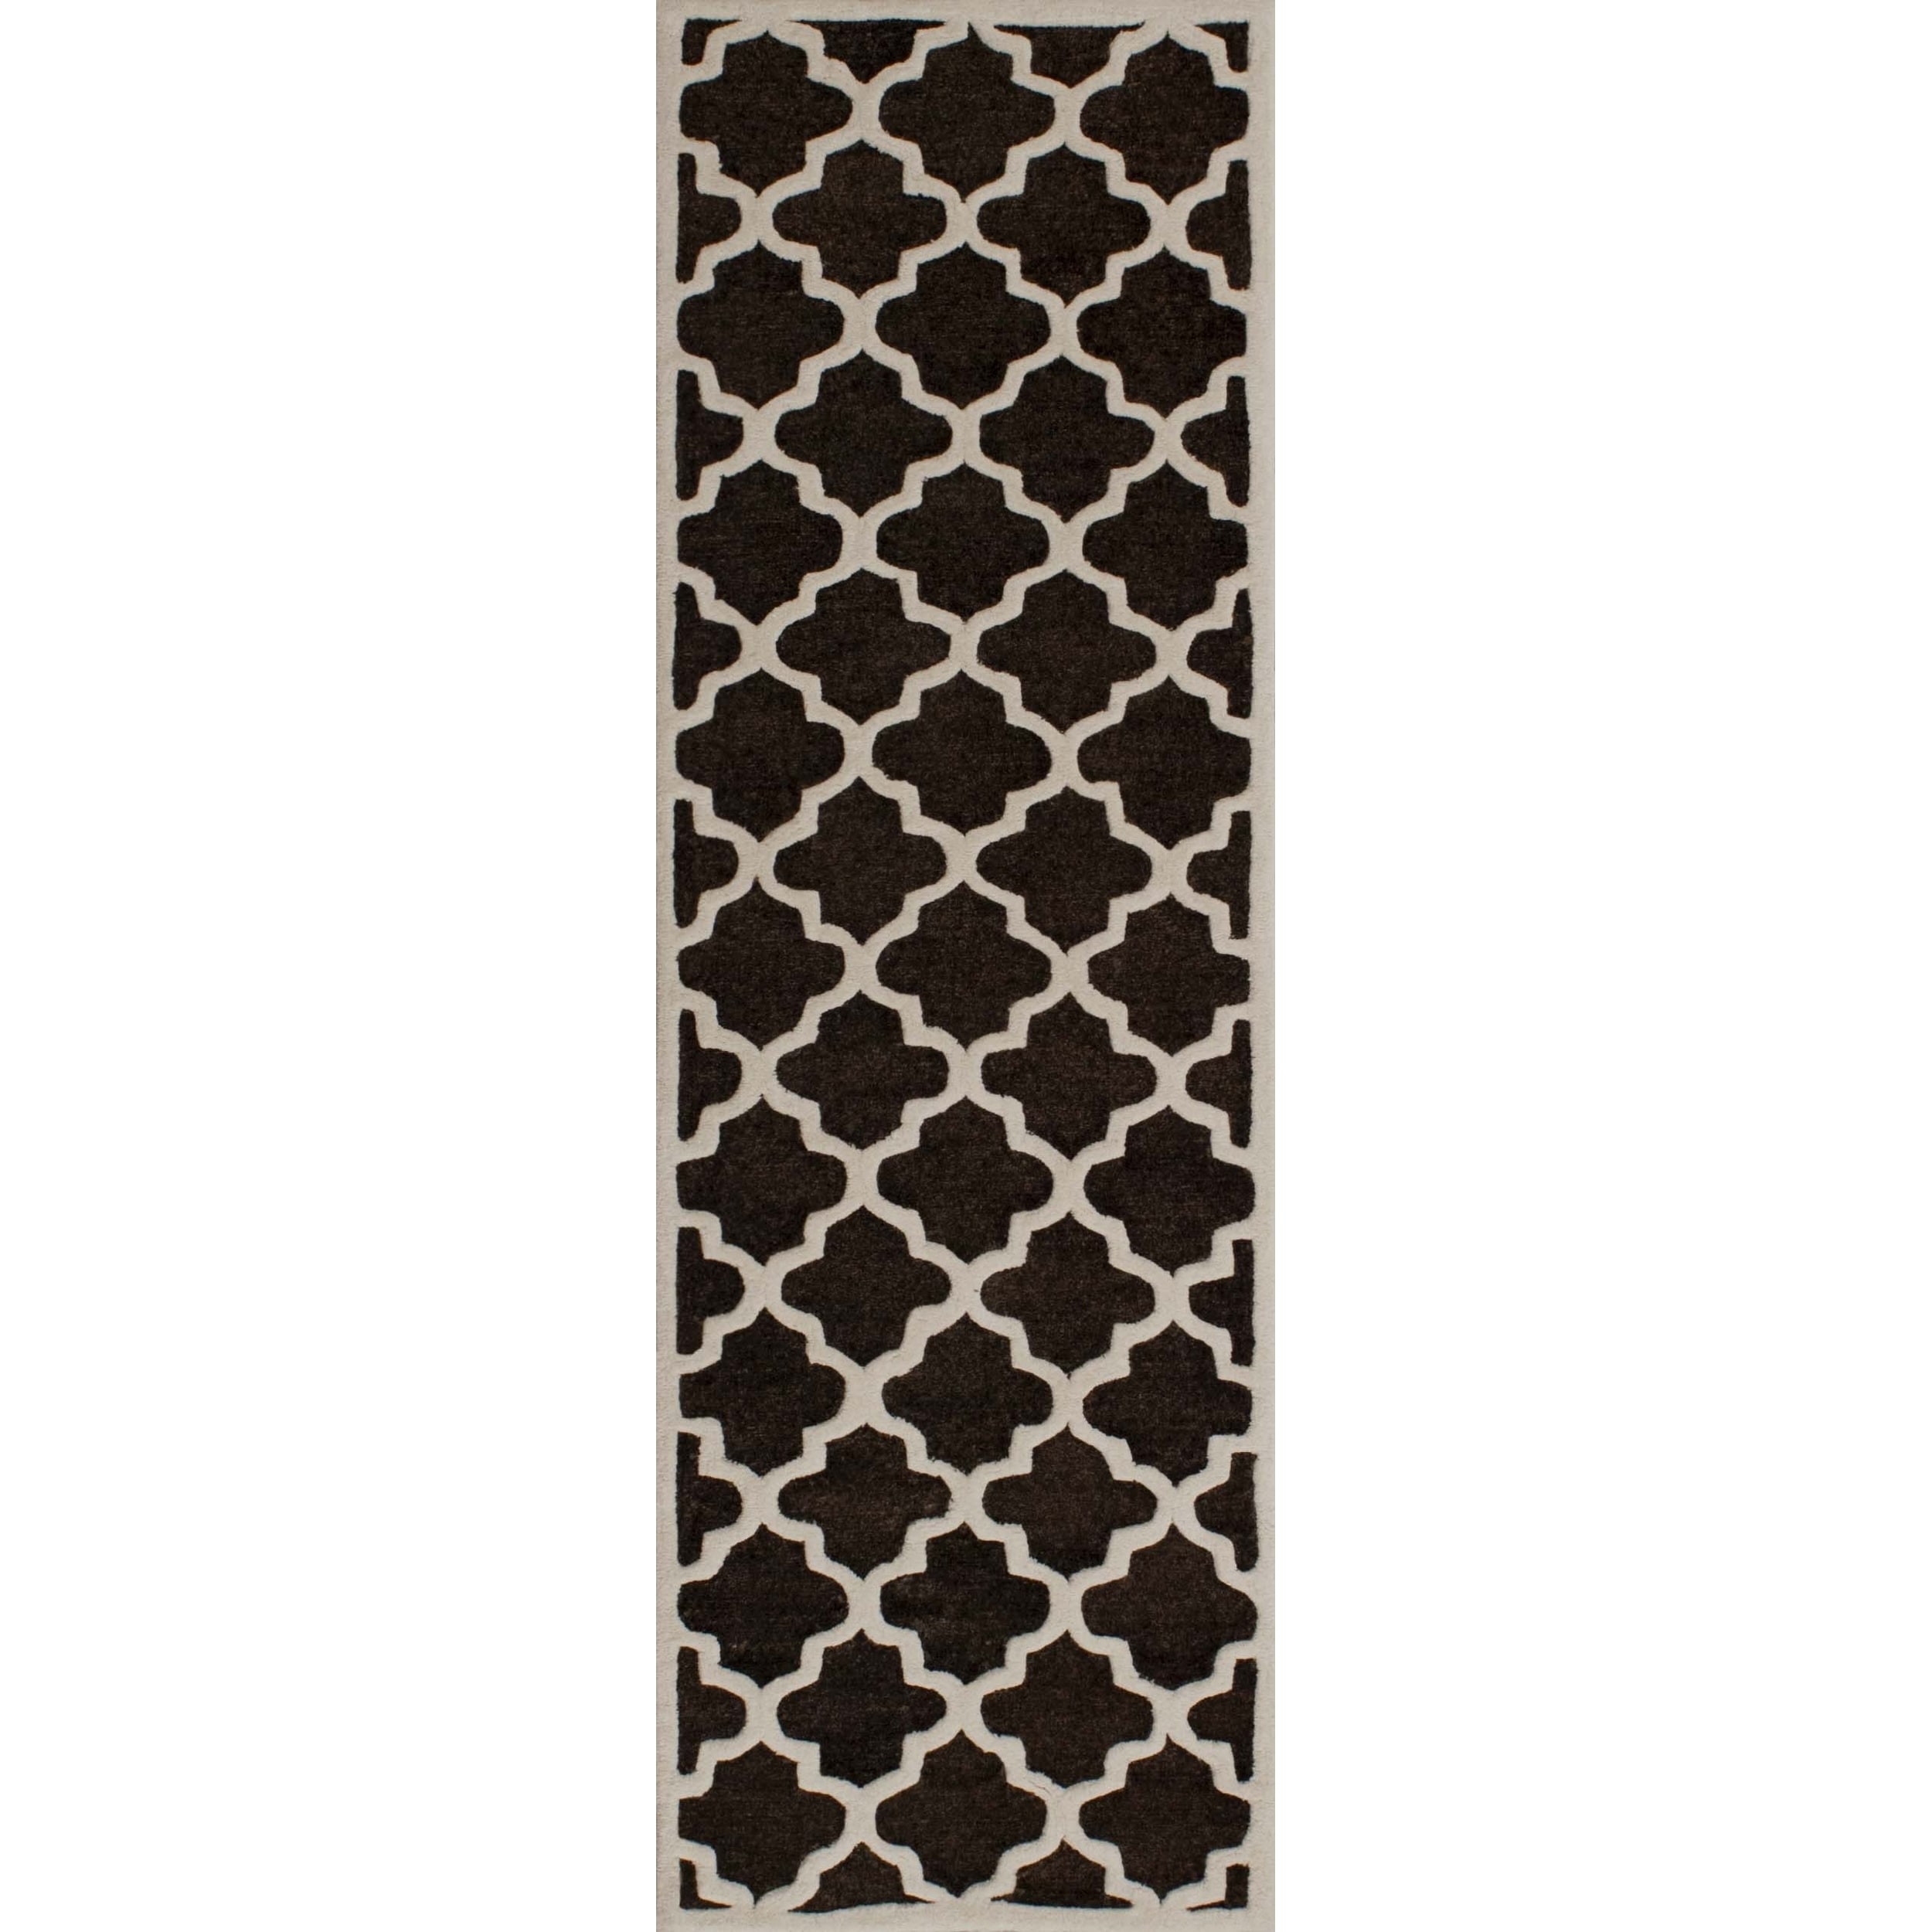 Safavieh Handmade Precious Charcoal Polyester/ Wool Runner Rug (26 X 8)